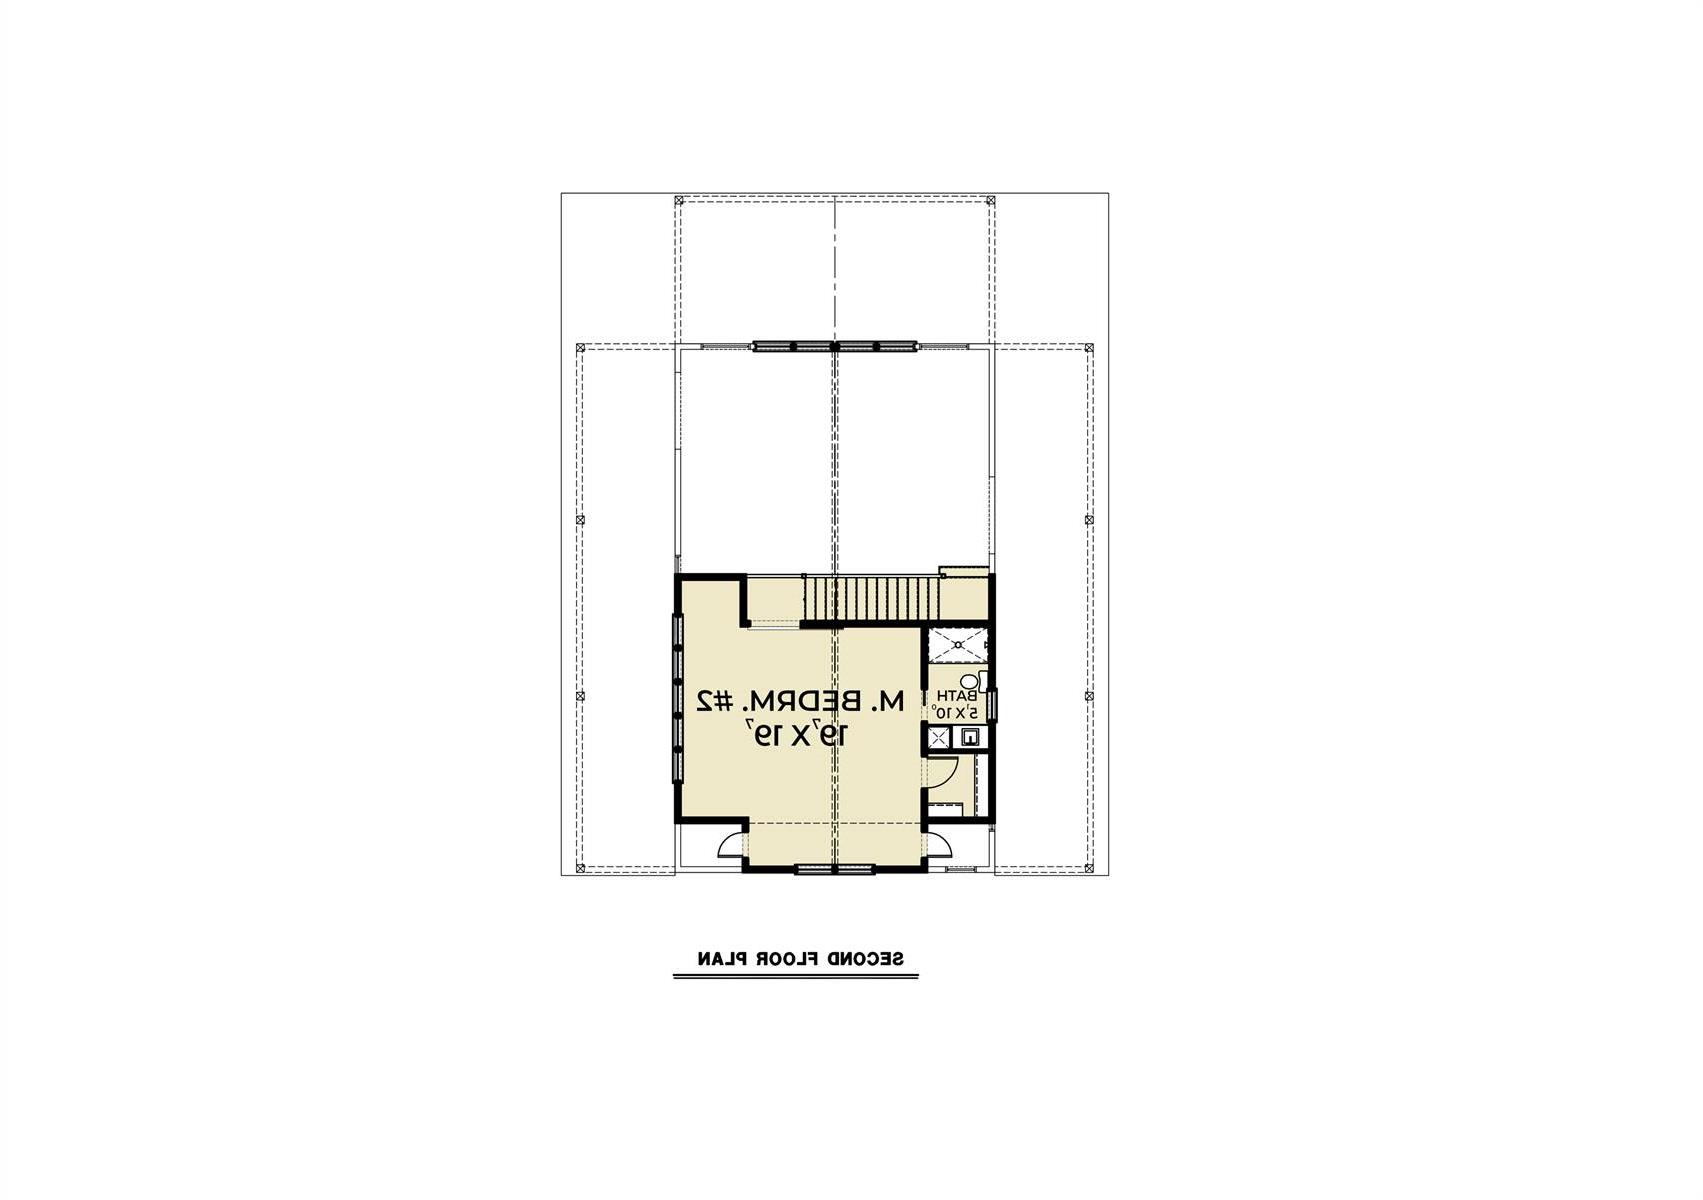 2nd Floor image of Northwest 628 House Plan